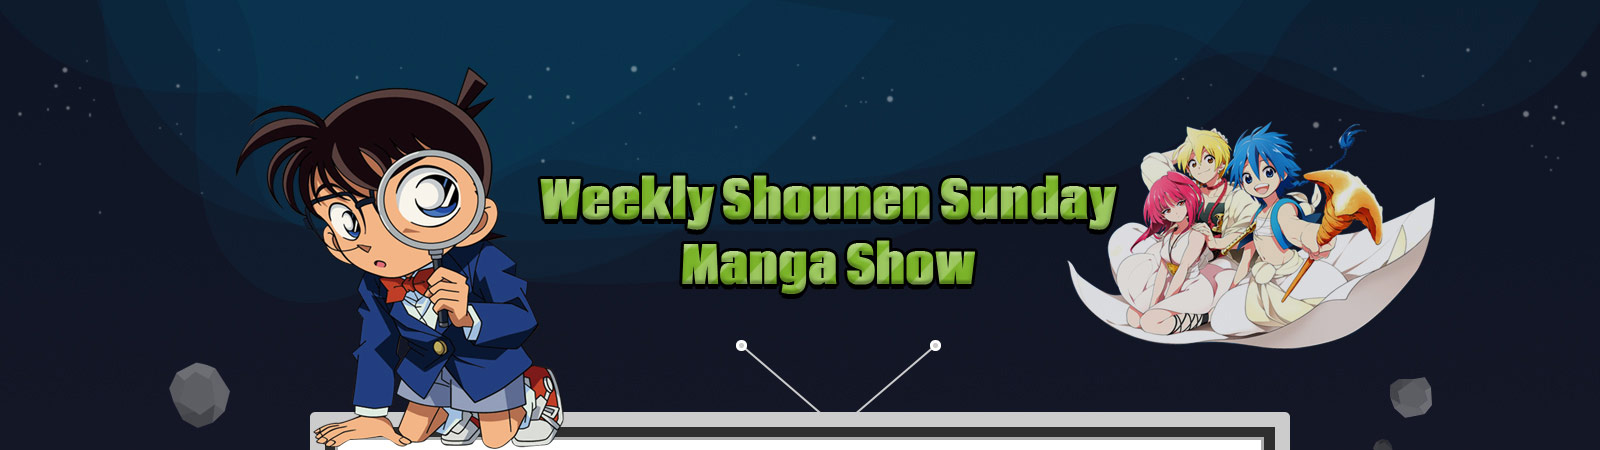 Weekly Shounen Sunday Manga Show